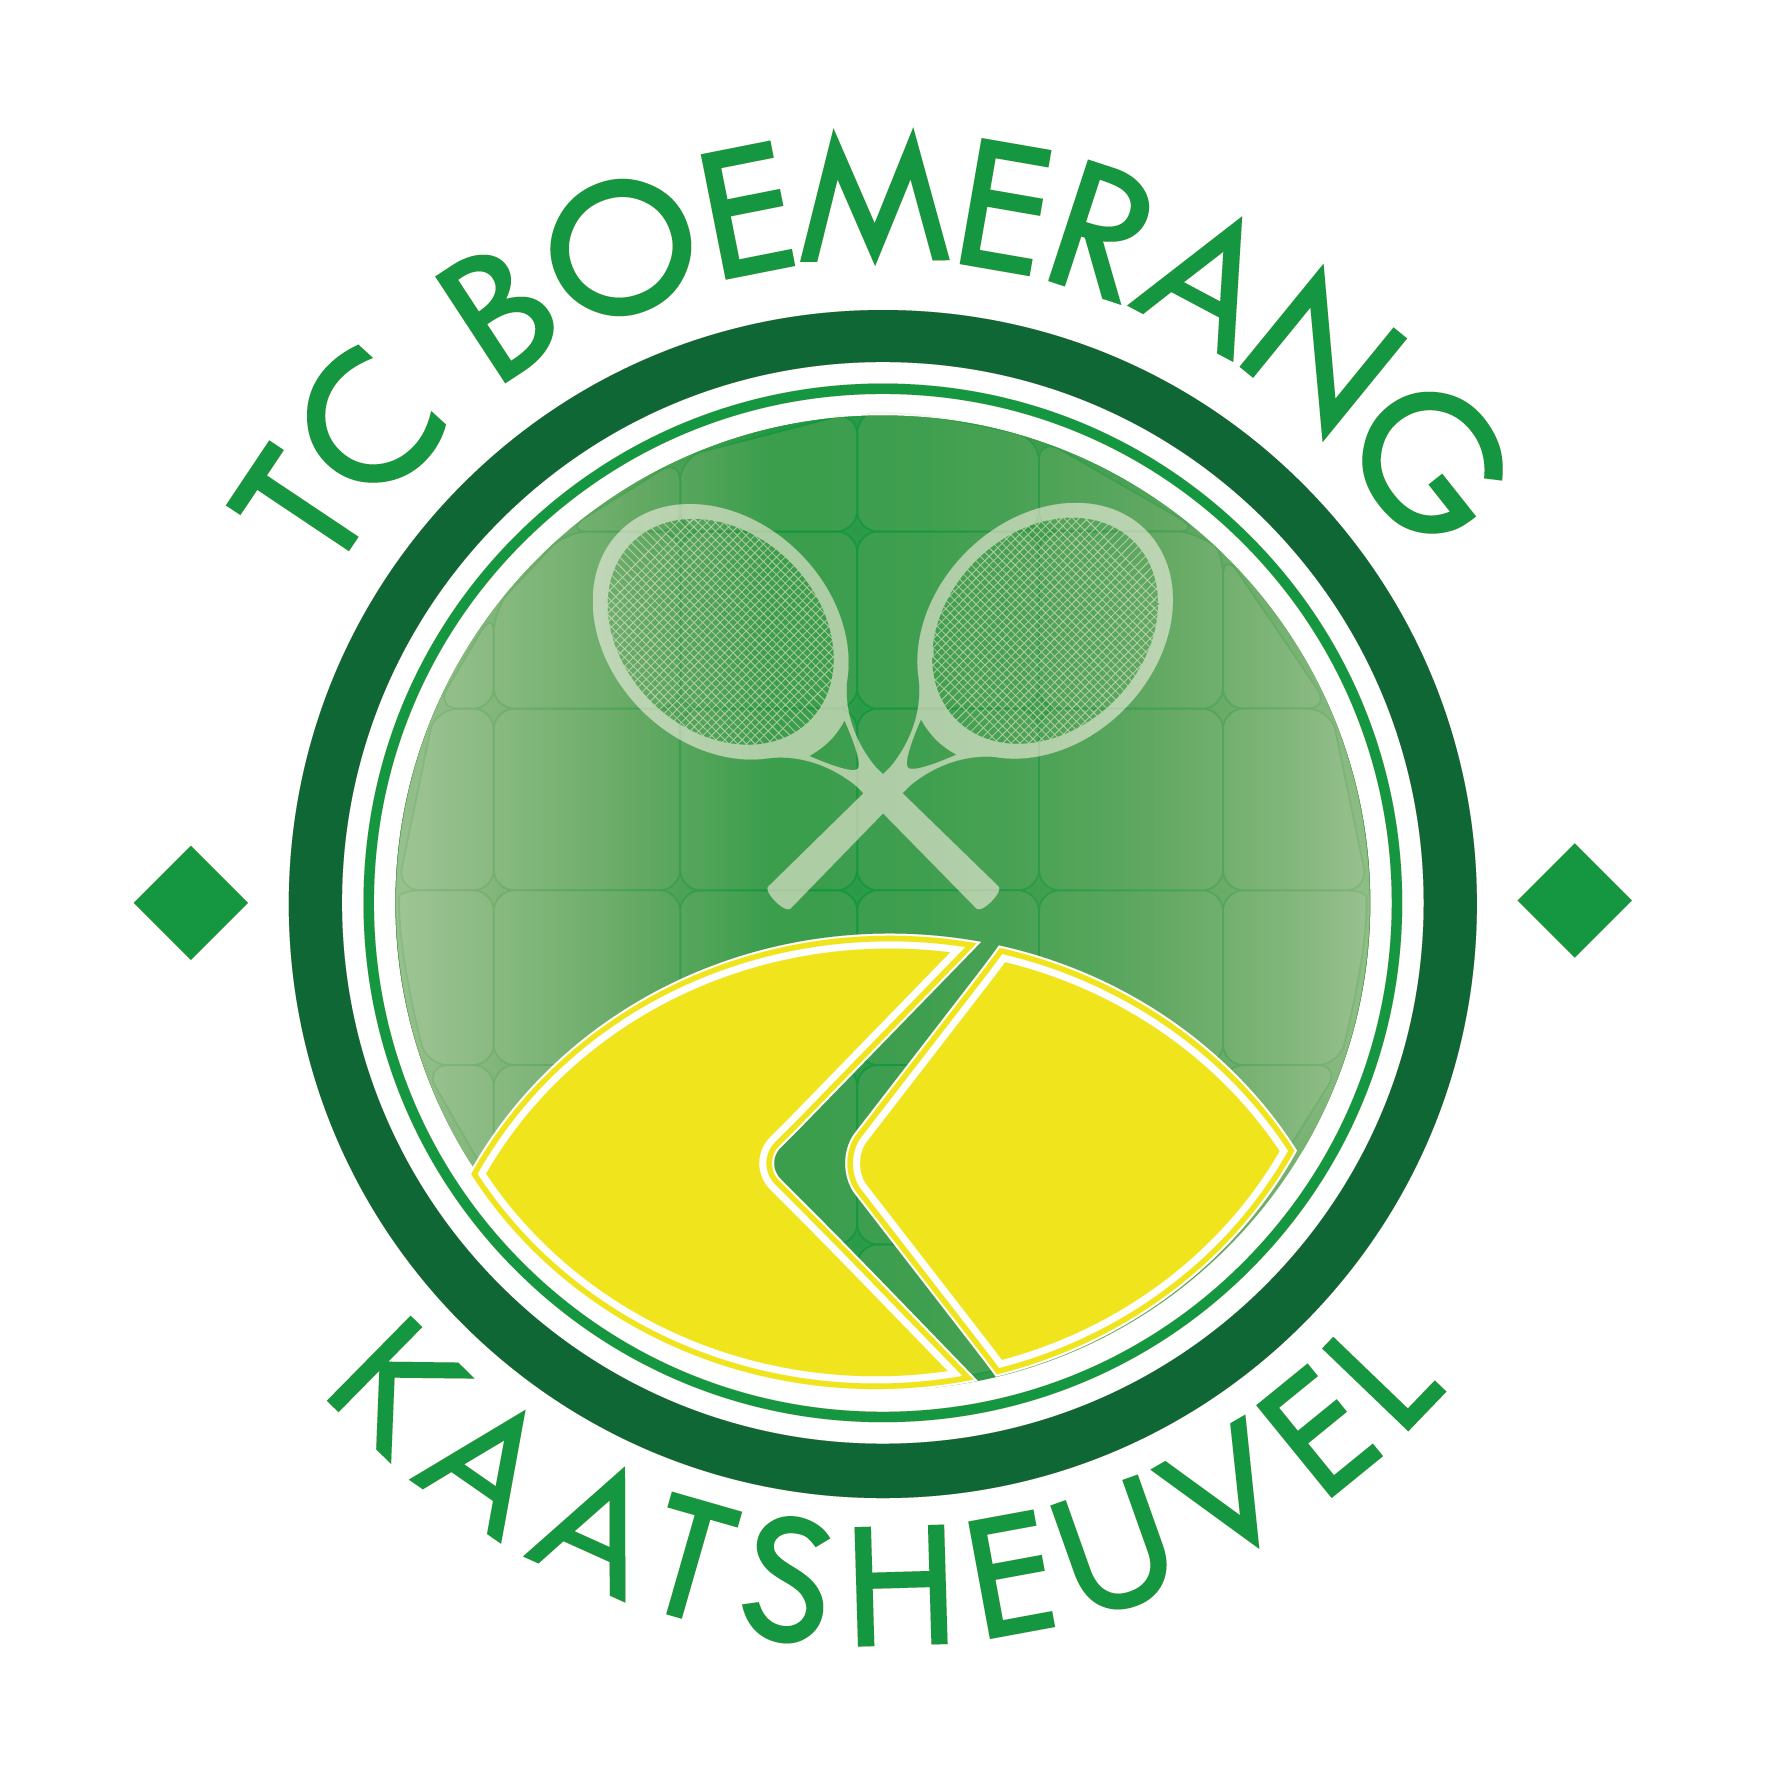 Tennisclub Boemerang